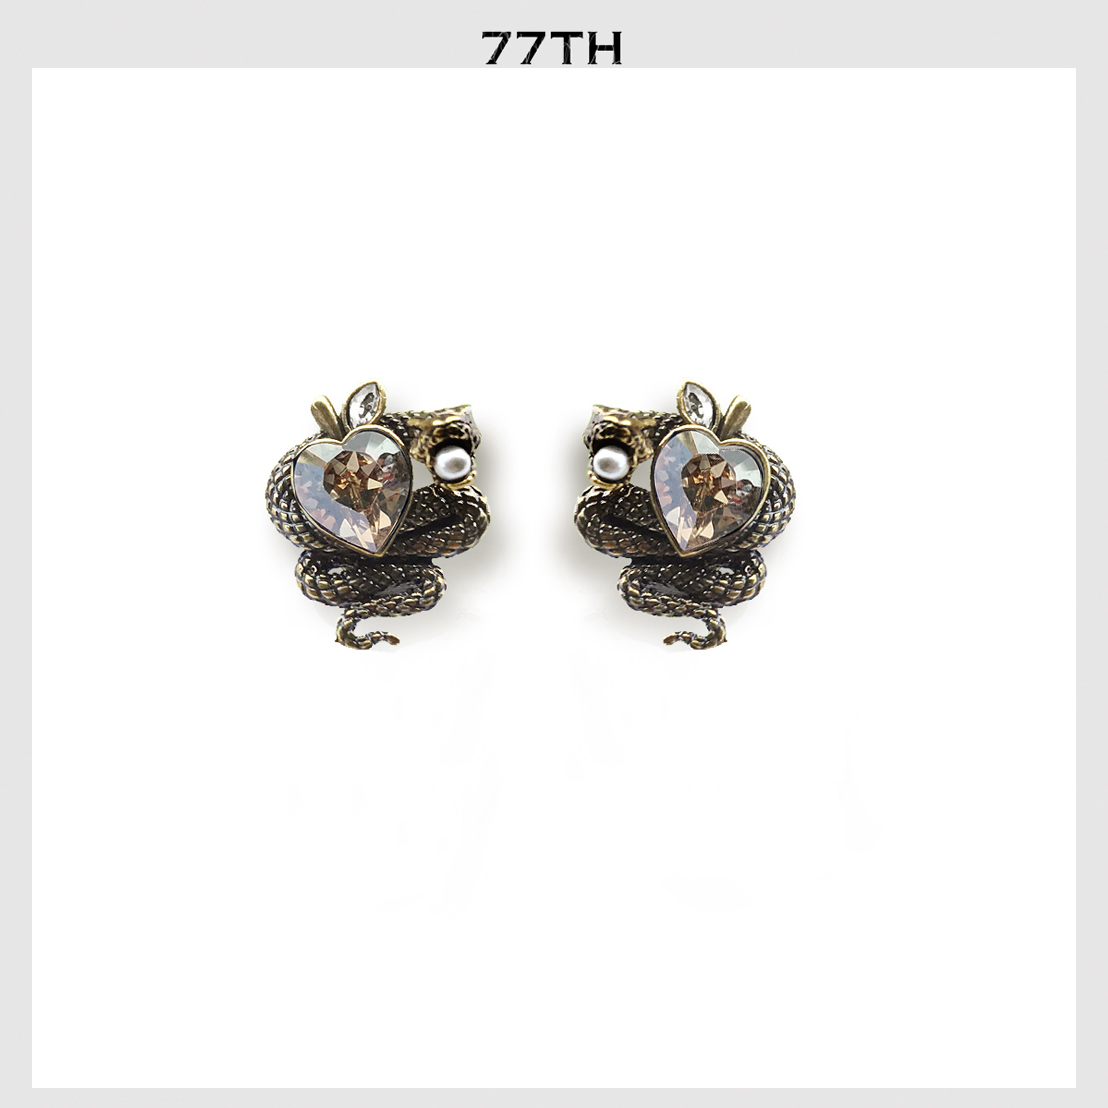 77th-sririta x 77th crystals from Swarovski collection serpent earrings champaign  crystals gold ต่างหู ศรีริต้า x 77th คริสตัลสวรอฟสกี้ สีทอง